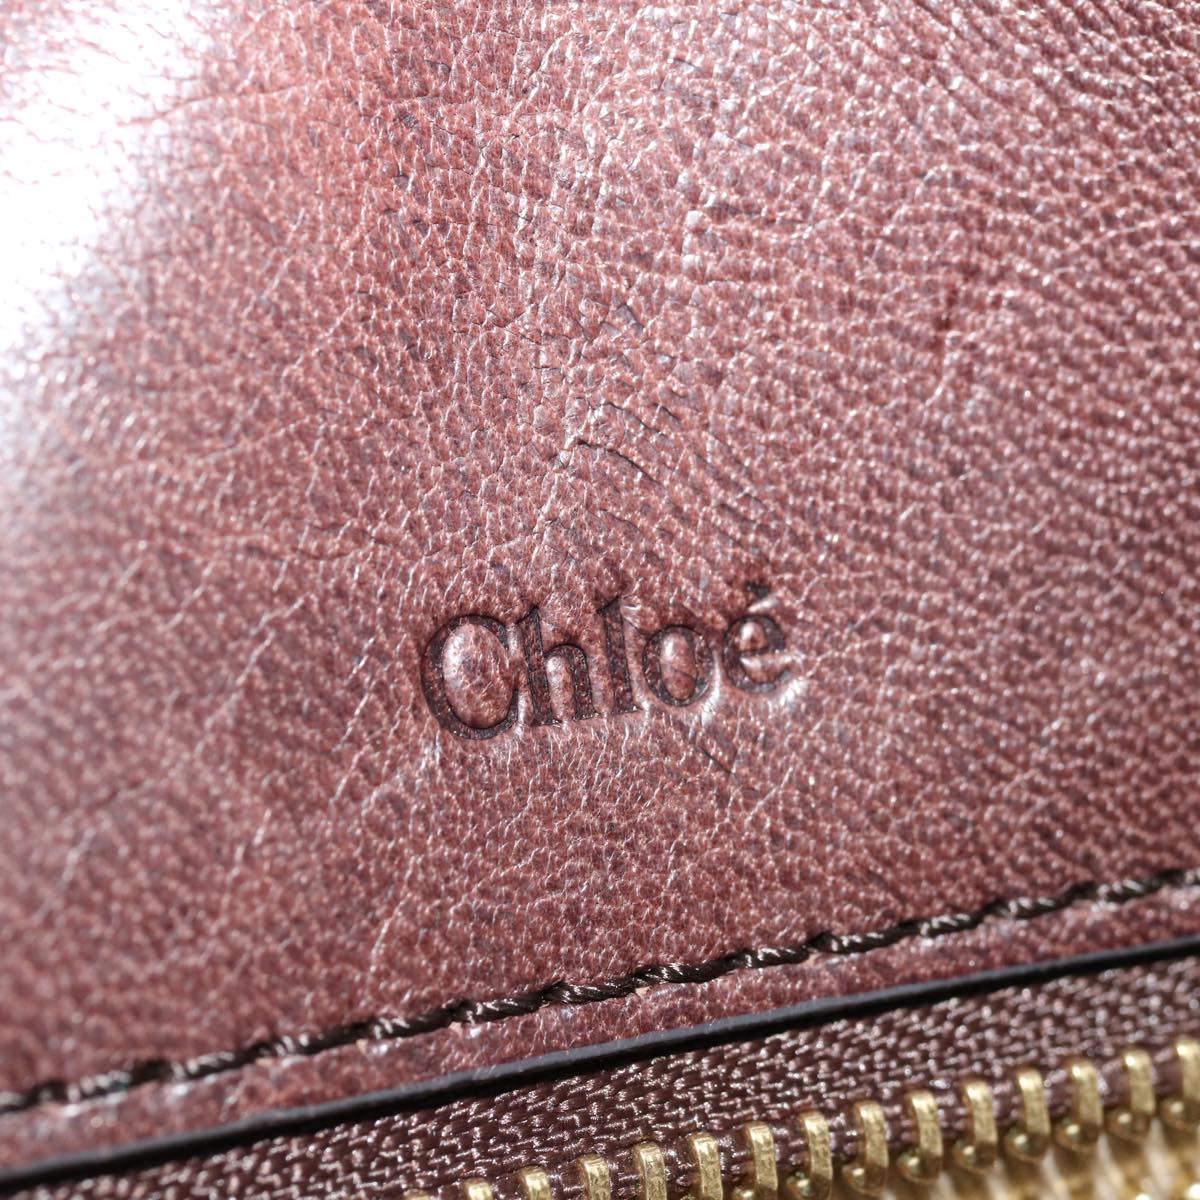 Chloe Hand Bag Leather Brown Auth yk10845